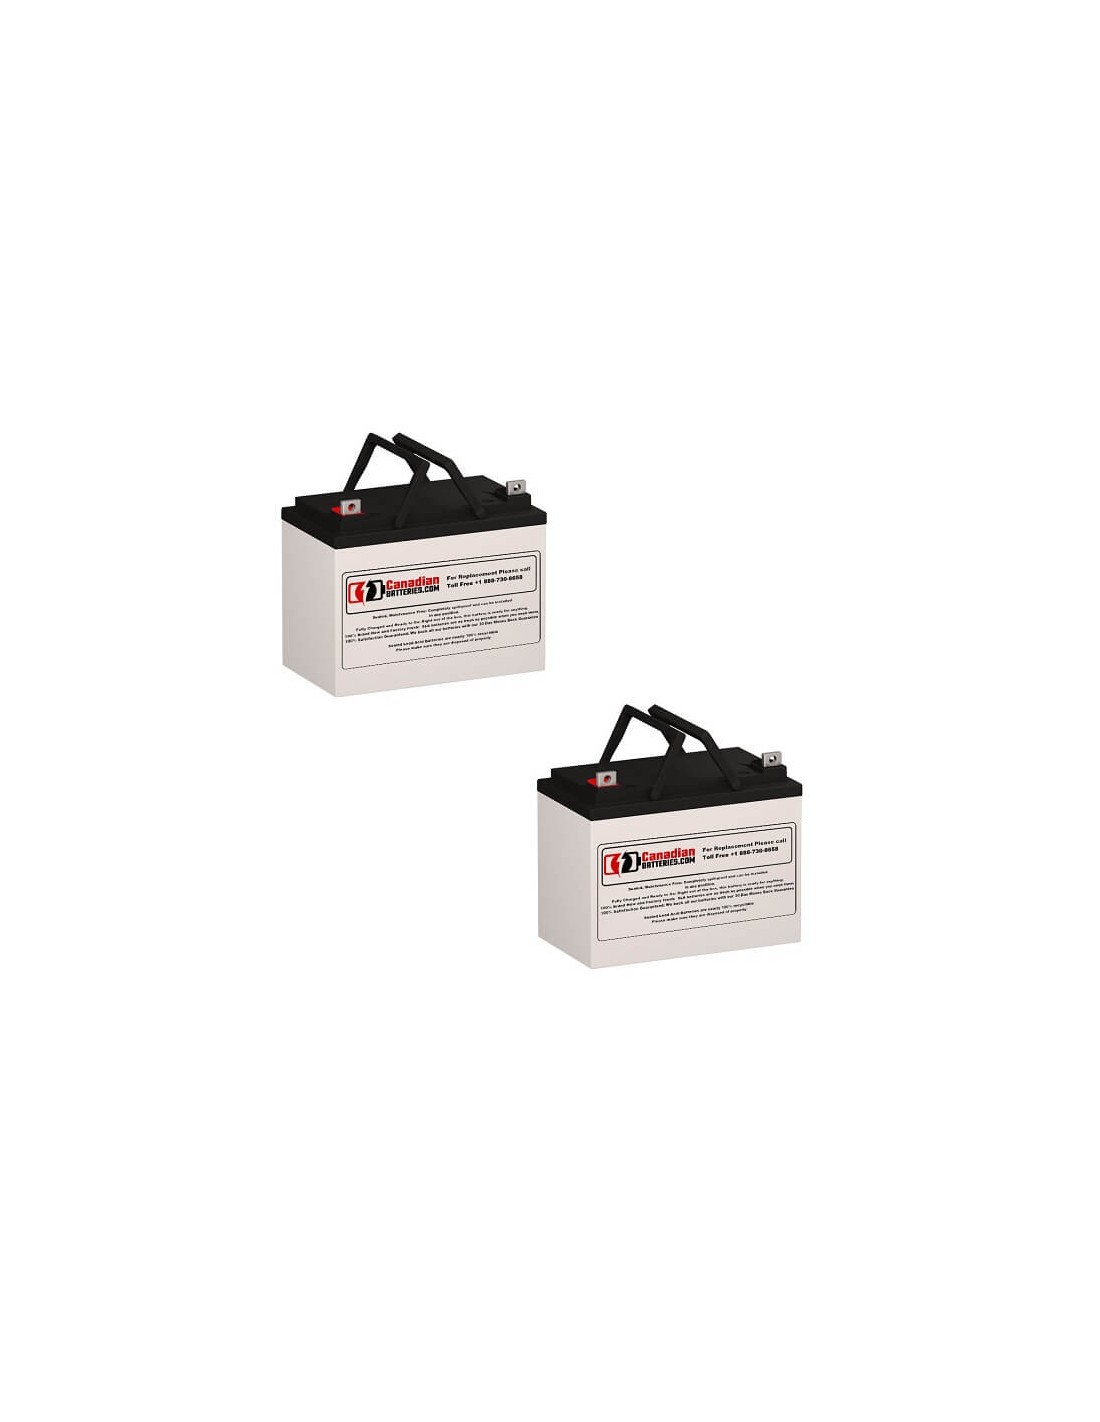 Batteries for Sola 400a UPS, 2 x 12V, 33Ah - 396Wh